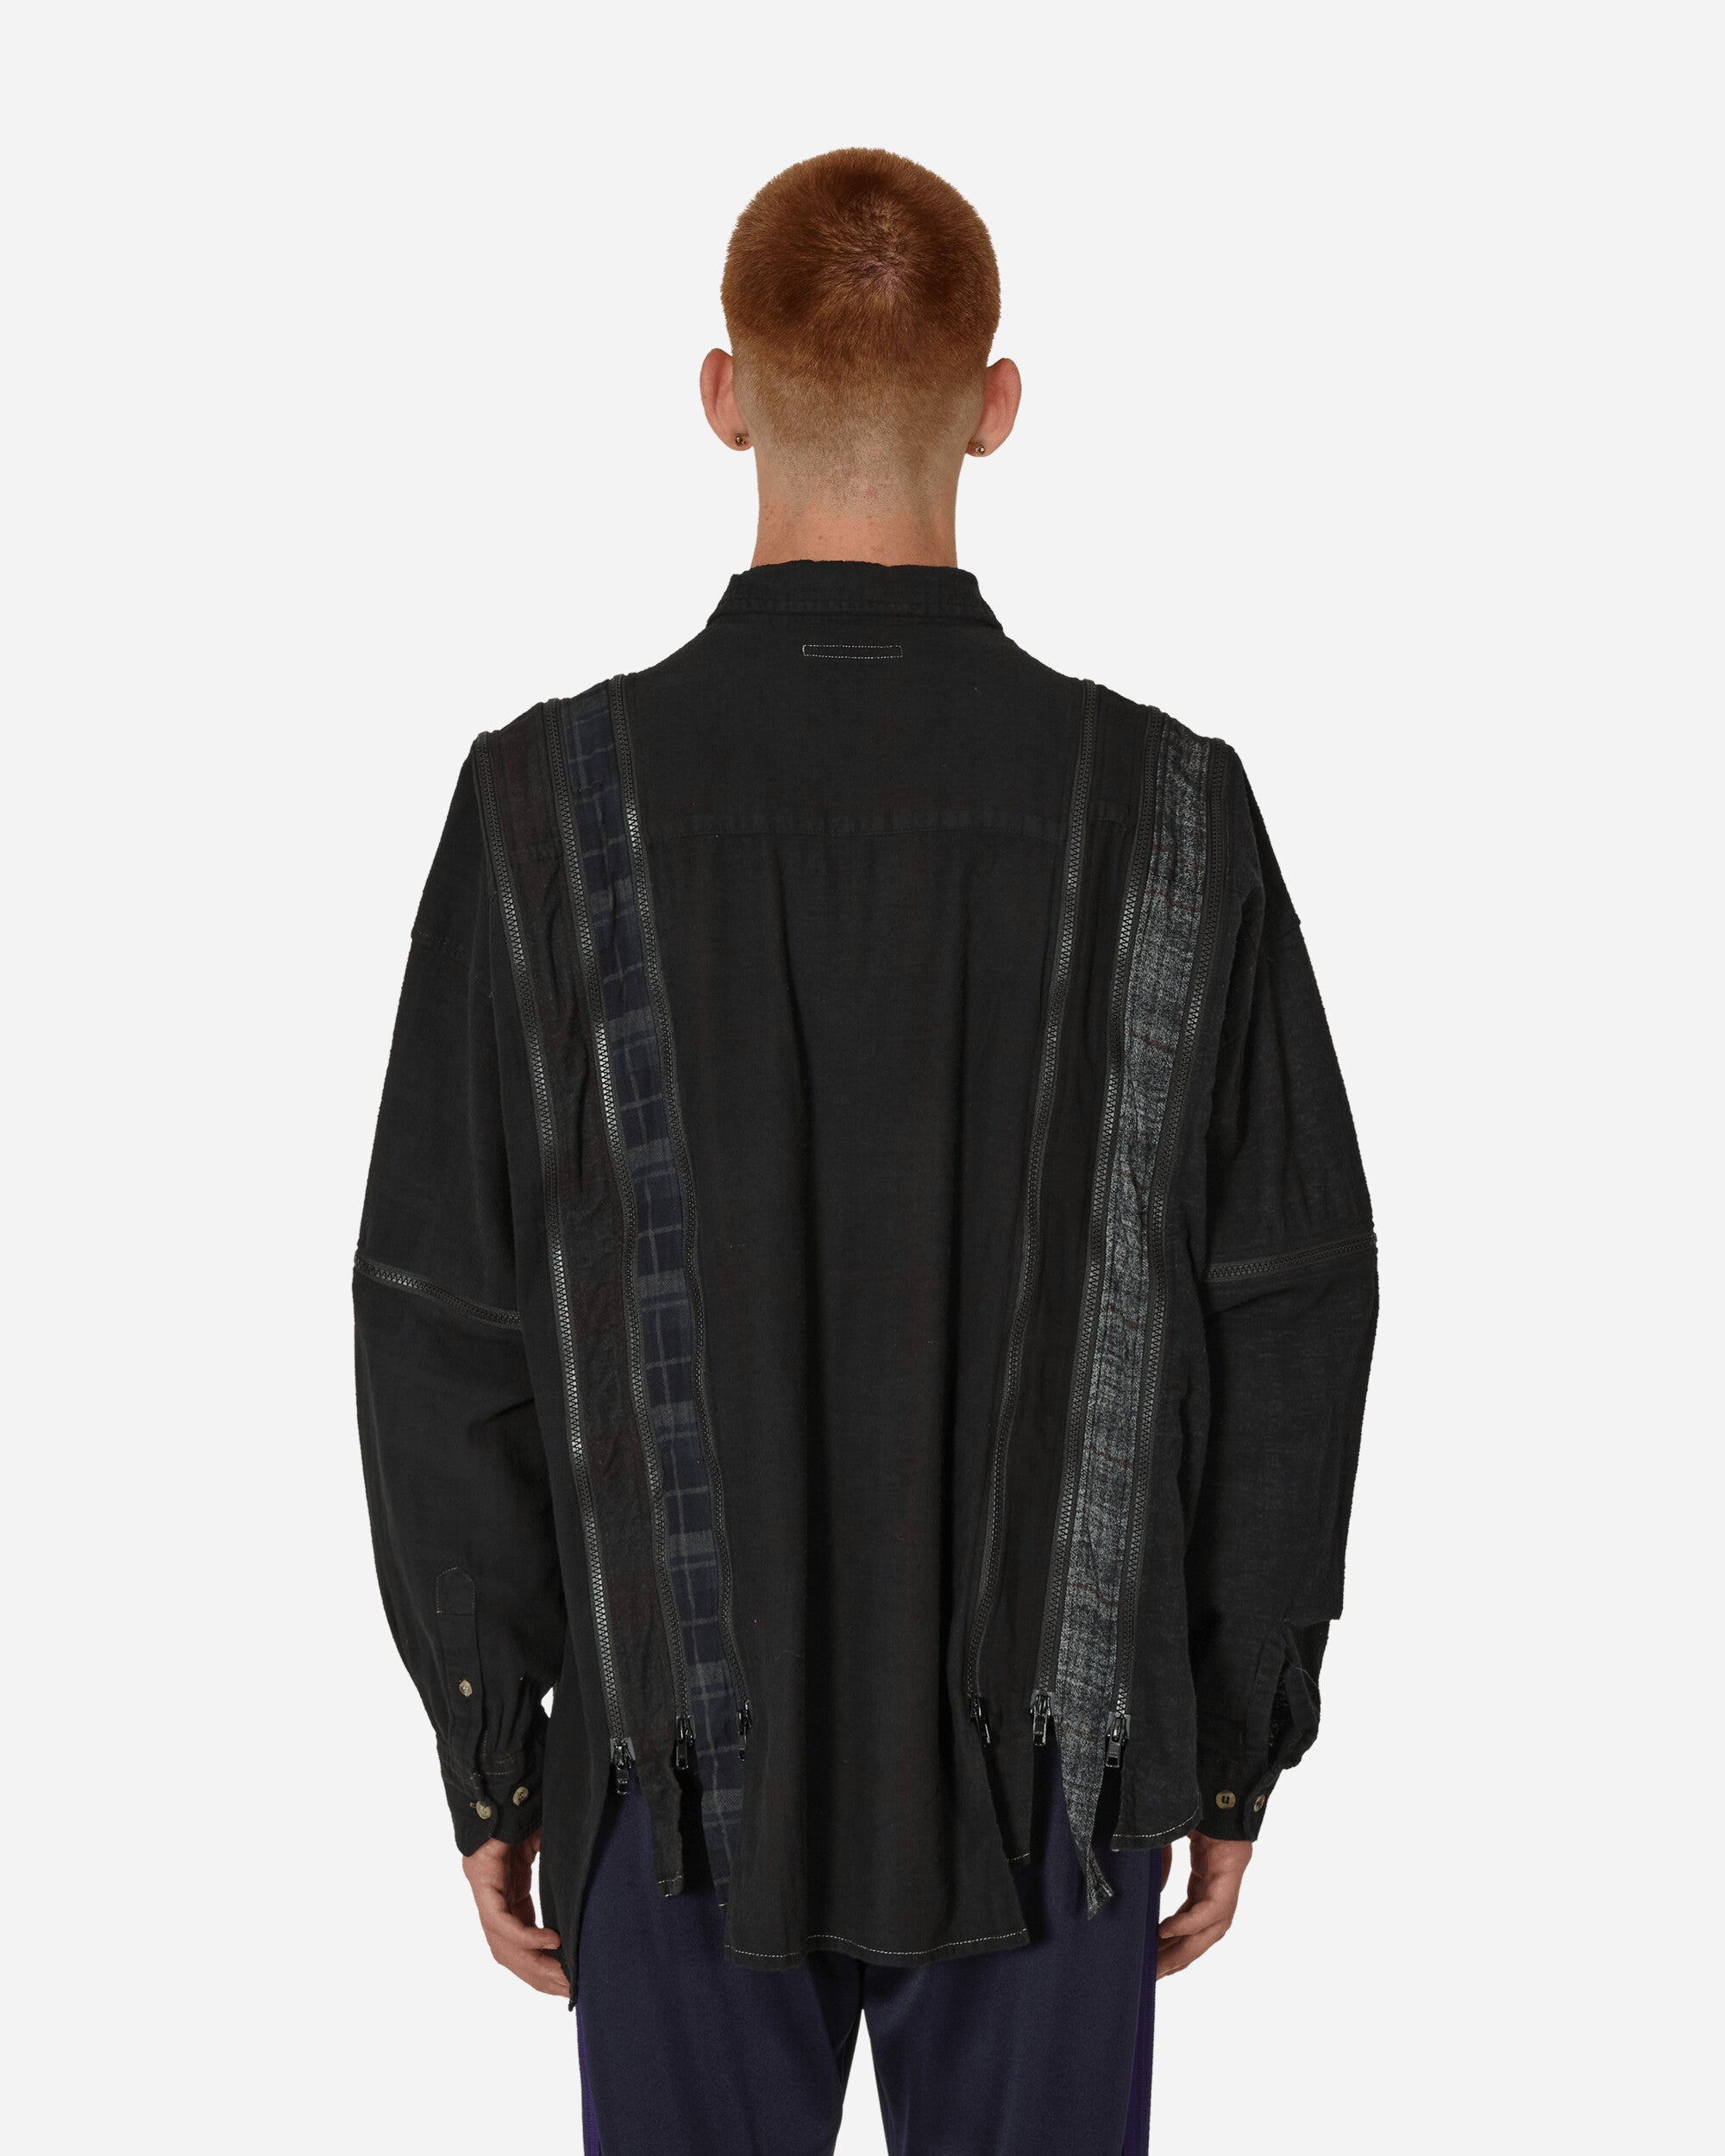 Needles Flannel Shirt -> 7 Cuts Wide Shirt / Over Dye Black Shirts Longsleeve Shirt NS301 E004